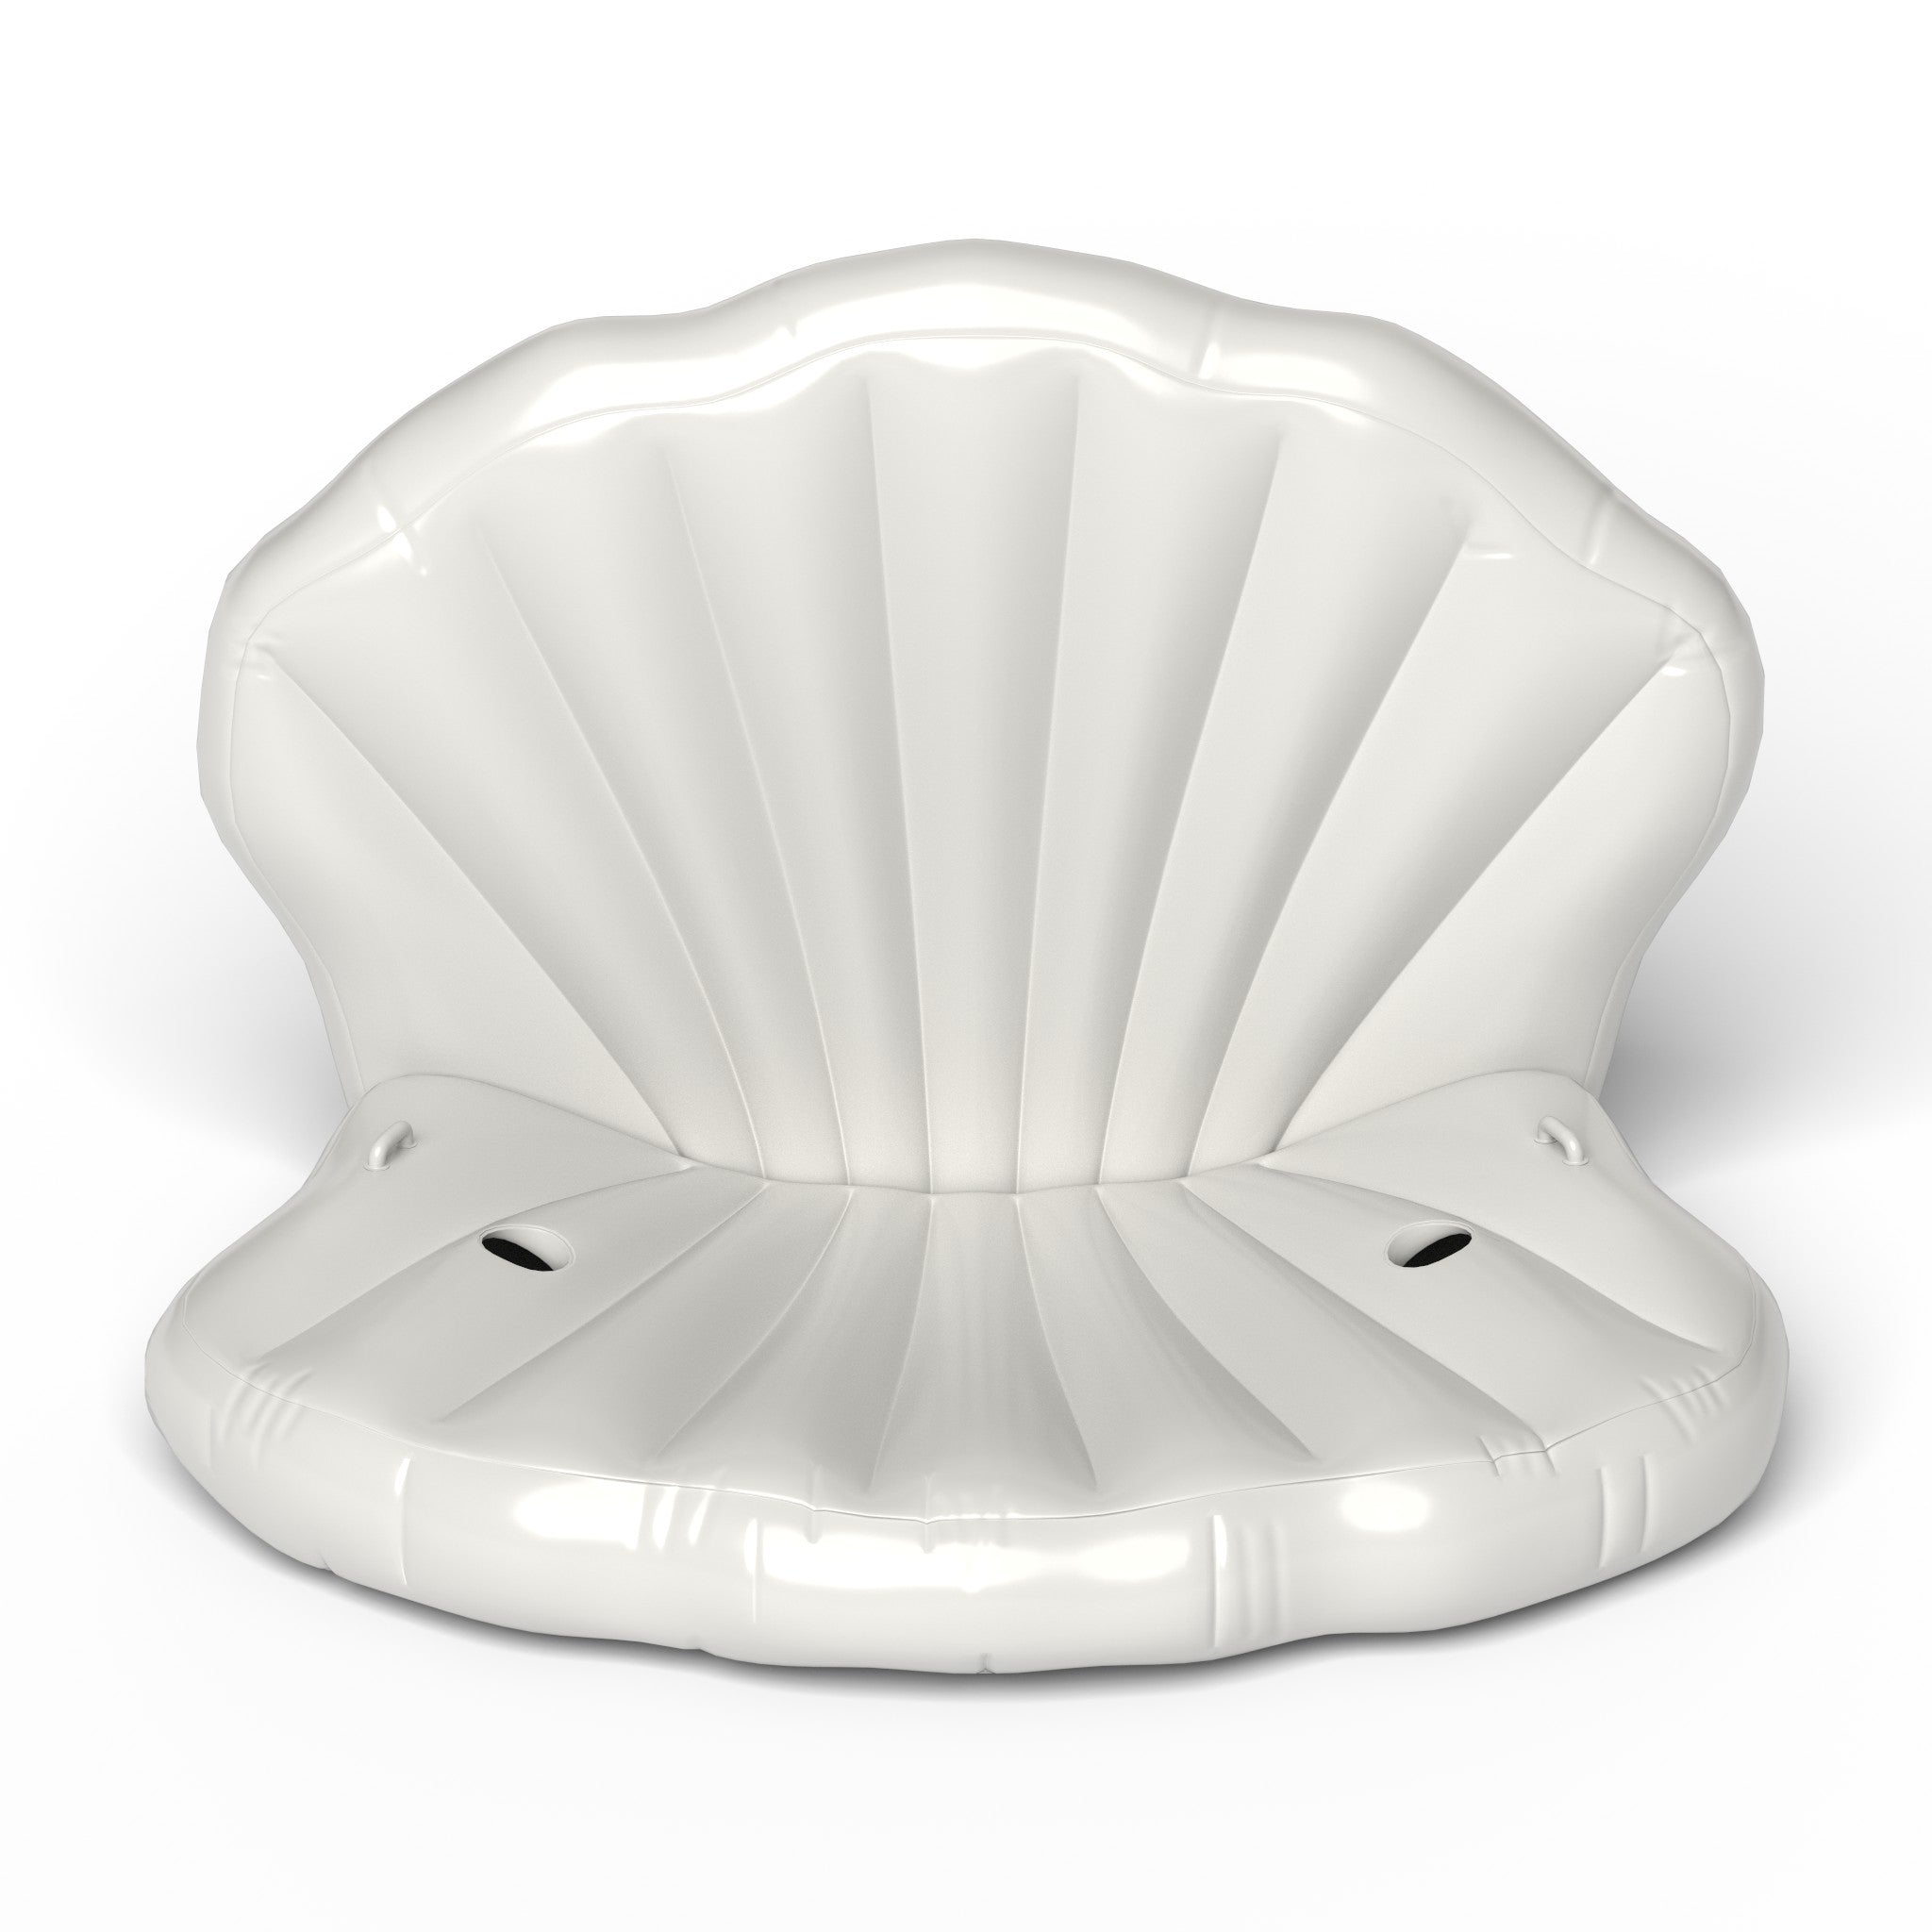 Clam / Seashell Inflatable Art Template